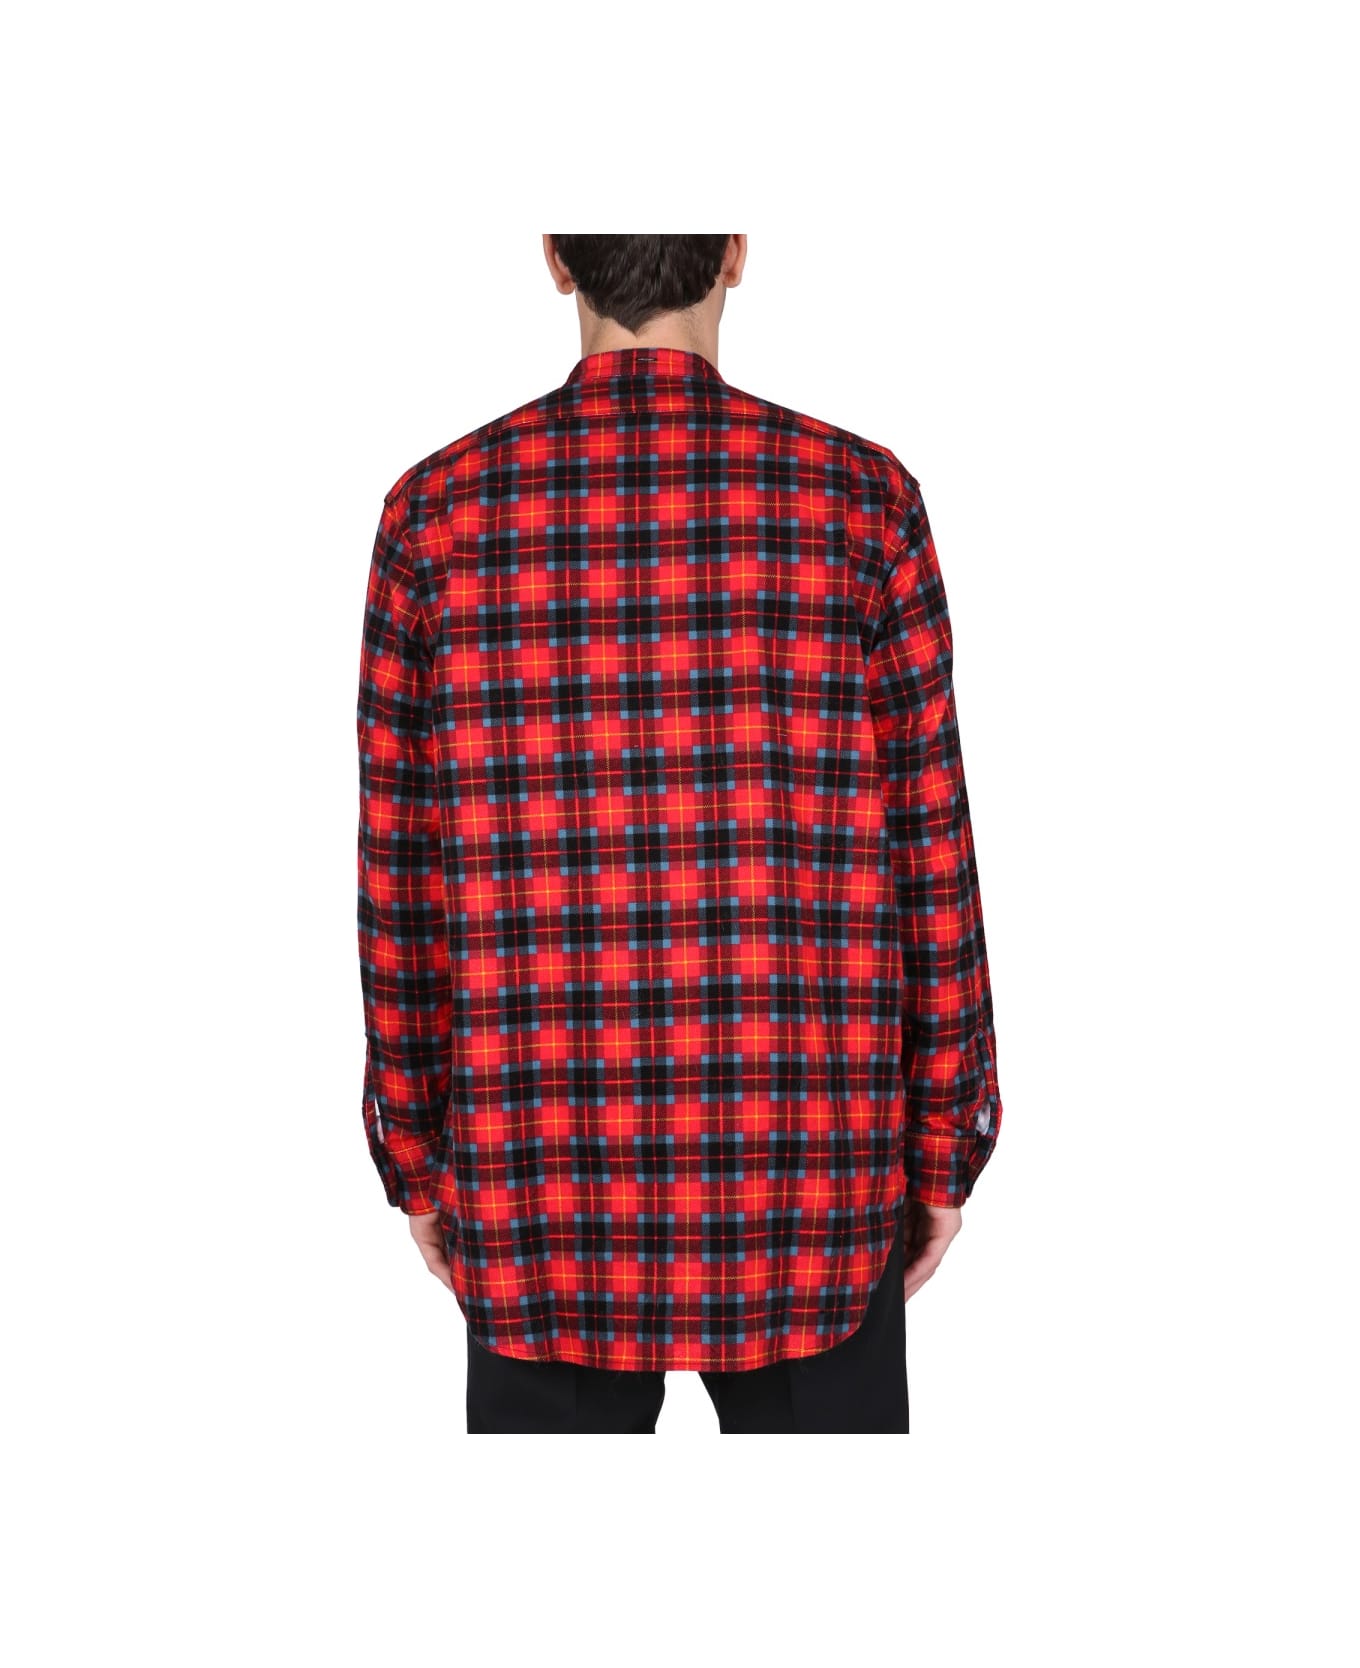 Engineered Garments Shirt With Tartan Pattern - RED